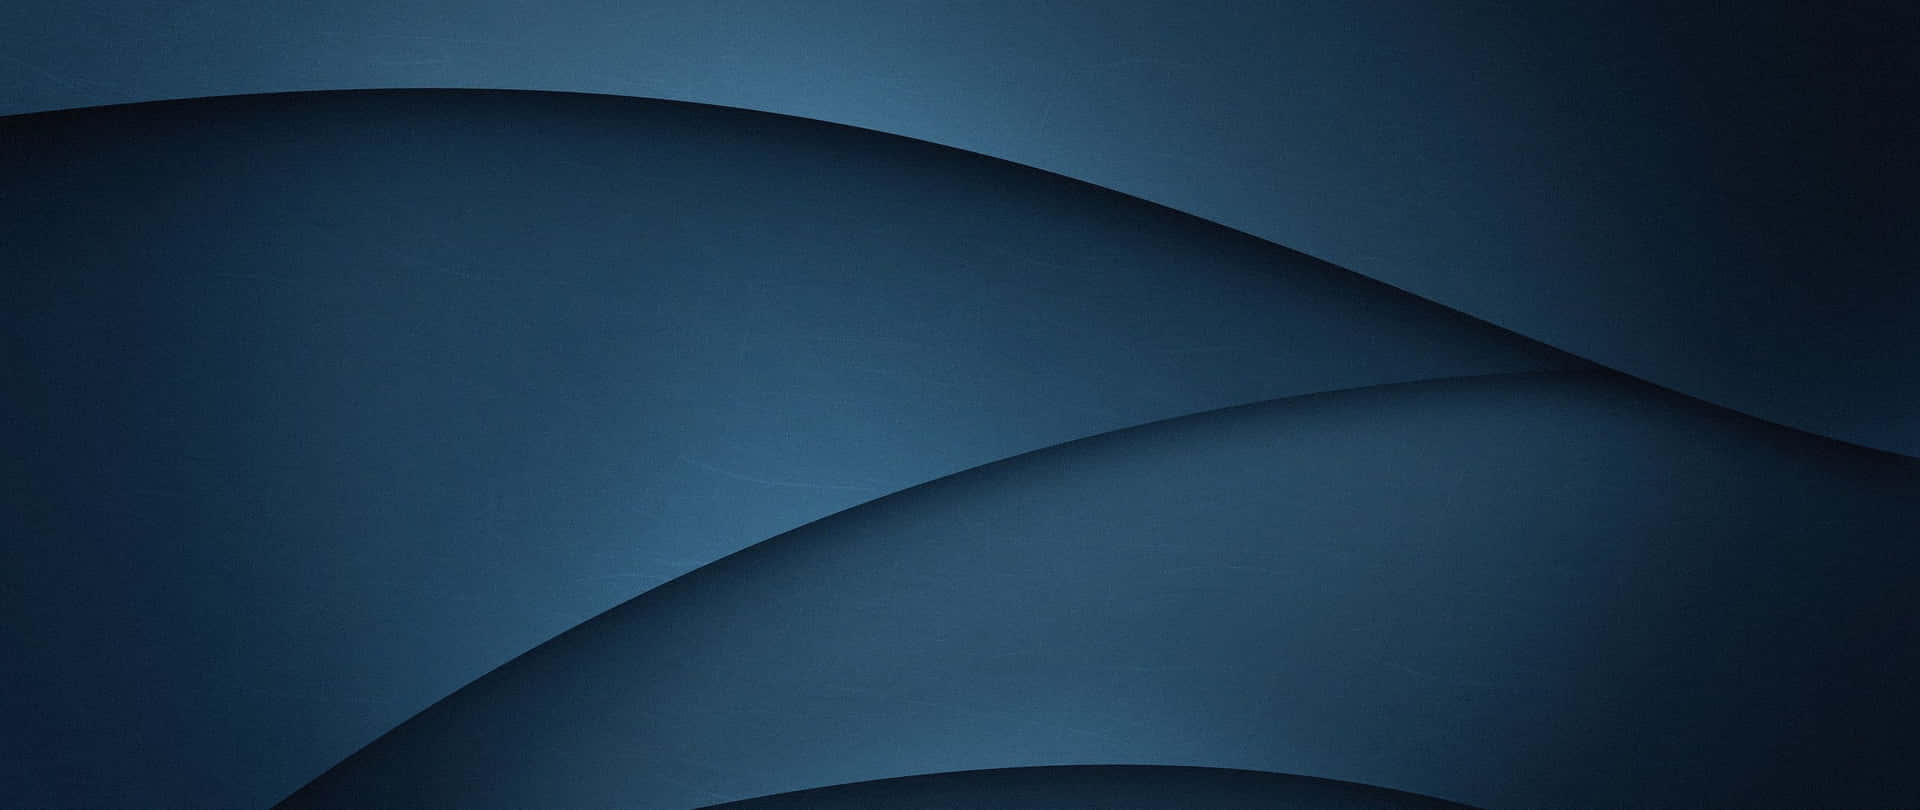 Fascinating Dark Blue Gradient With Wavy Lines Wallpaper